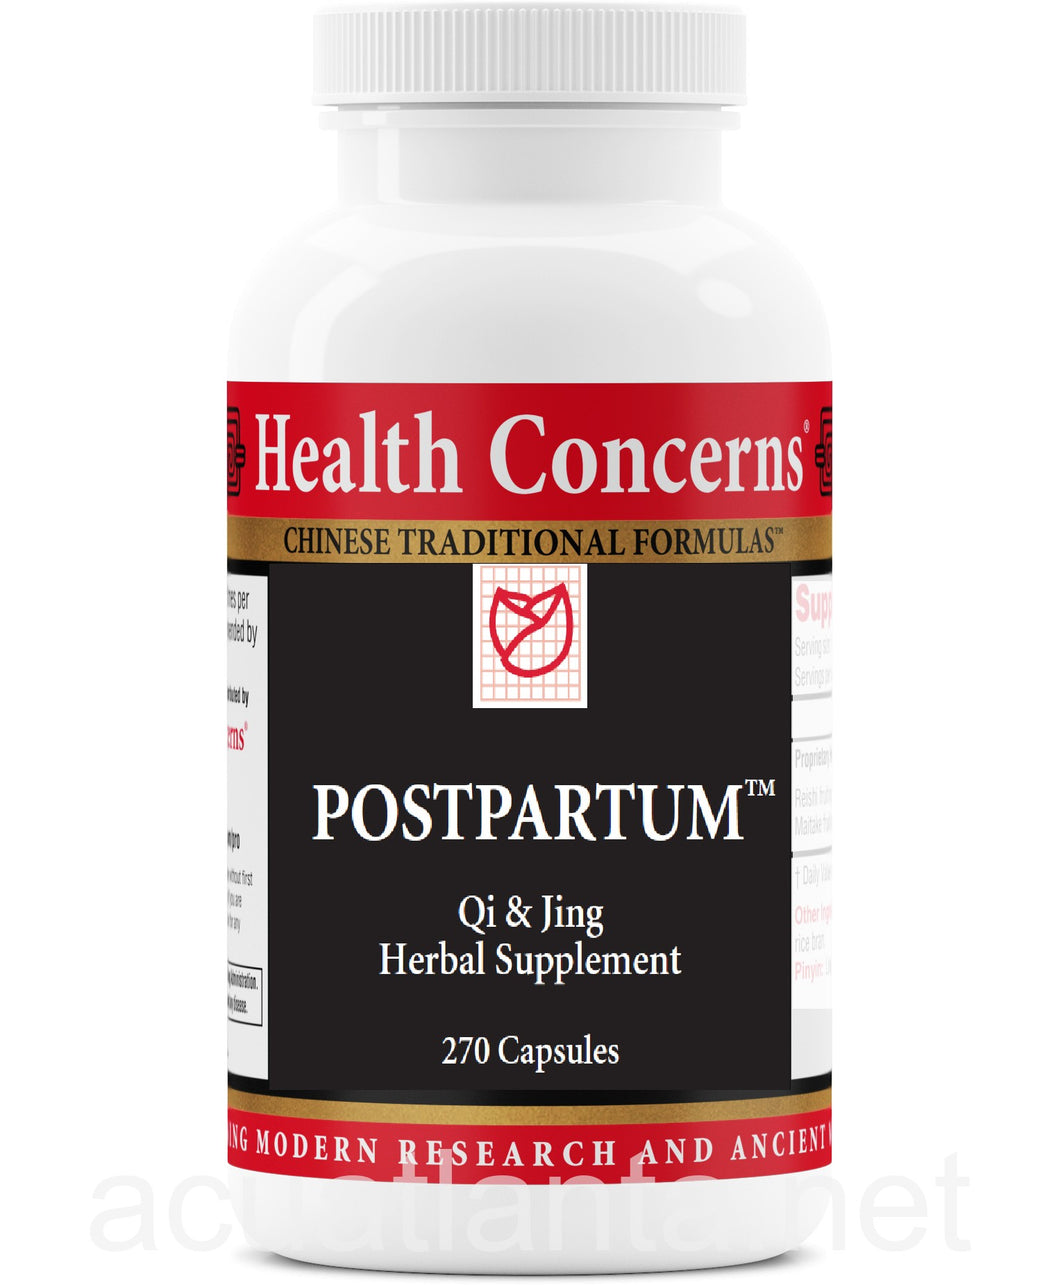 Postpartum 270 capsules by Health Concerns